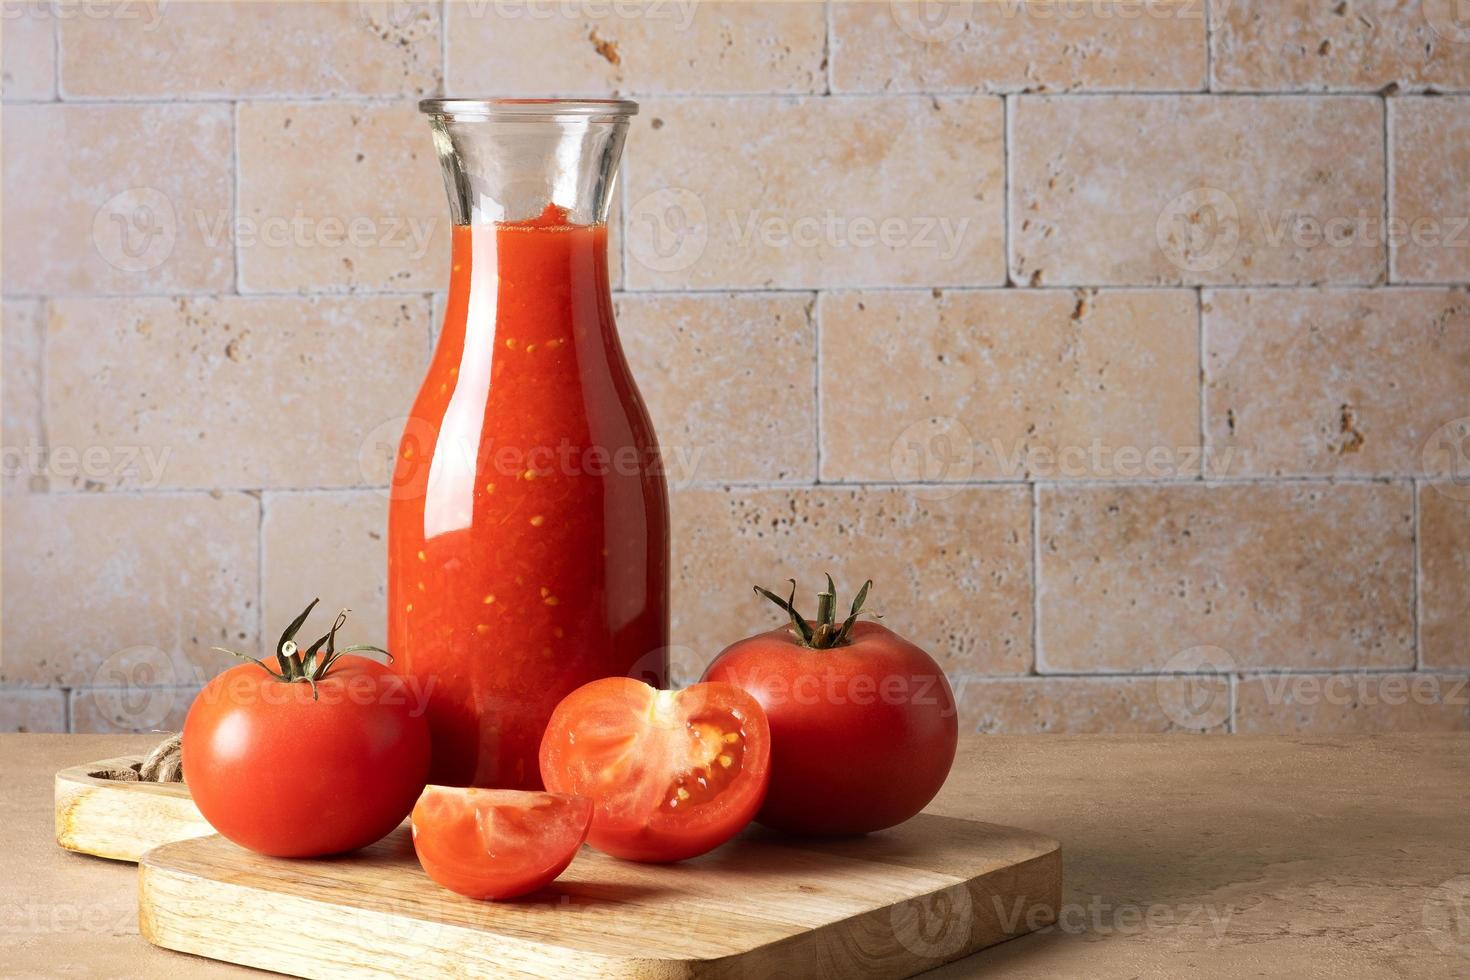 botella de vidrio con salsa de tomate casera y tomates maduros foto